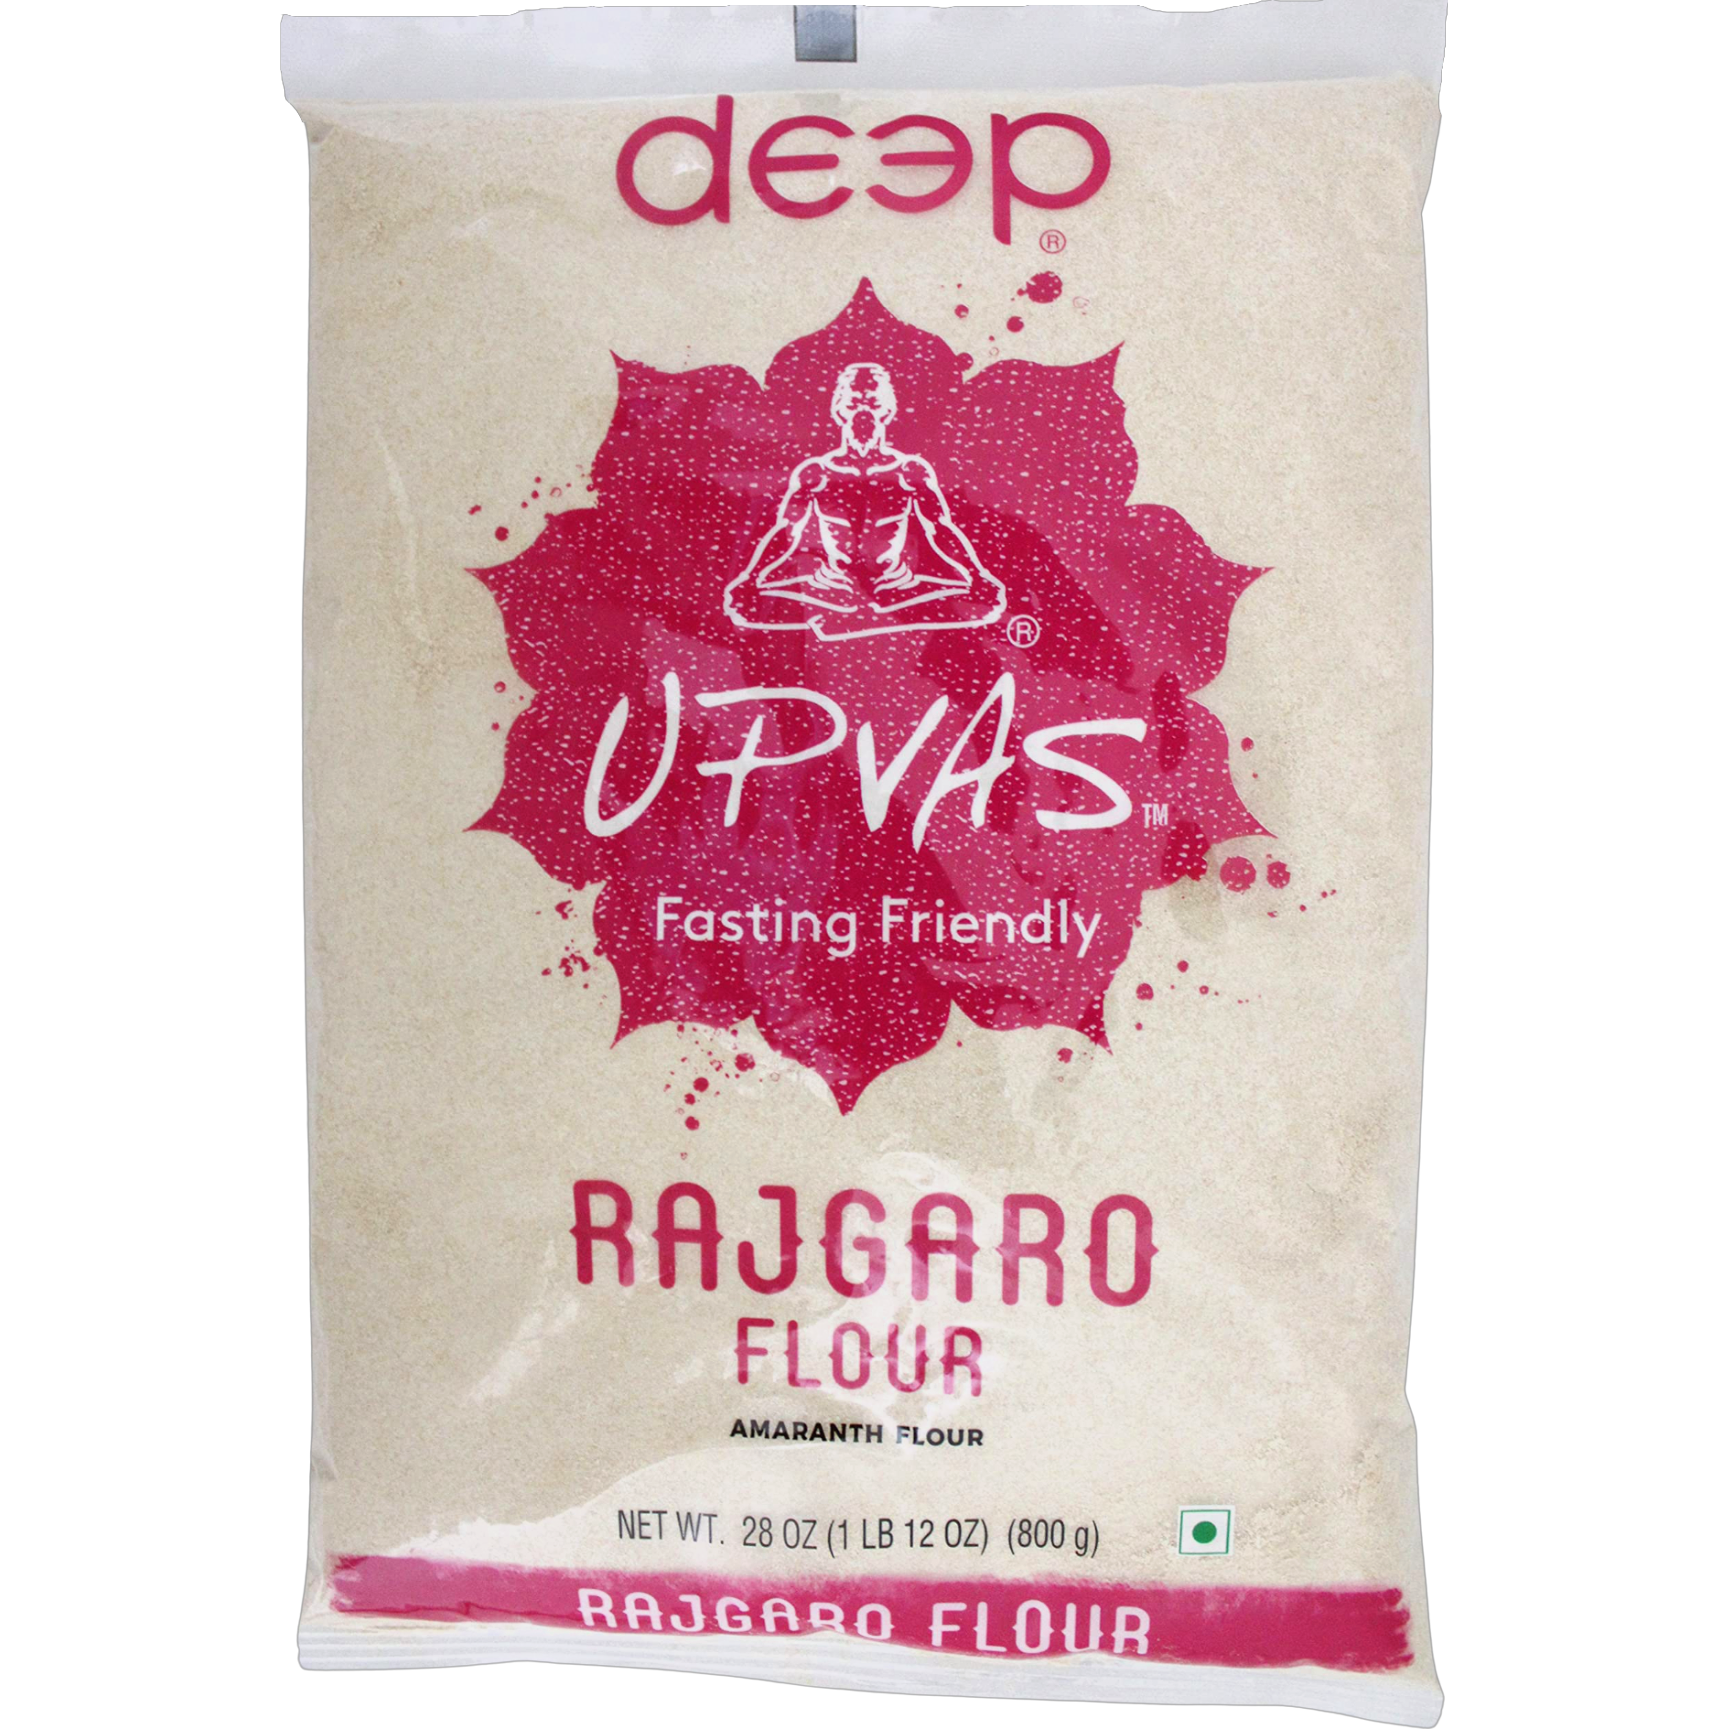 Deep Upvas Rajgaro Flour - 400 Gm (14 Oz)